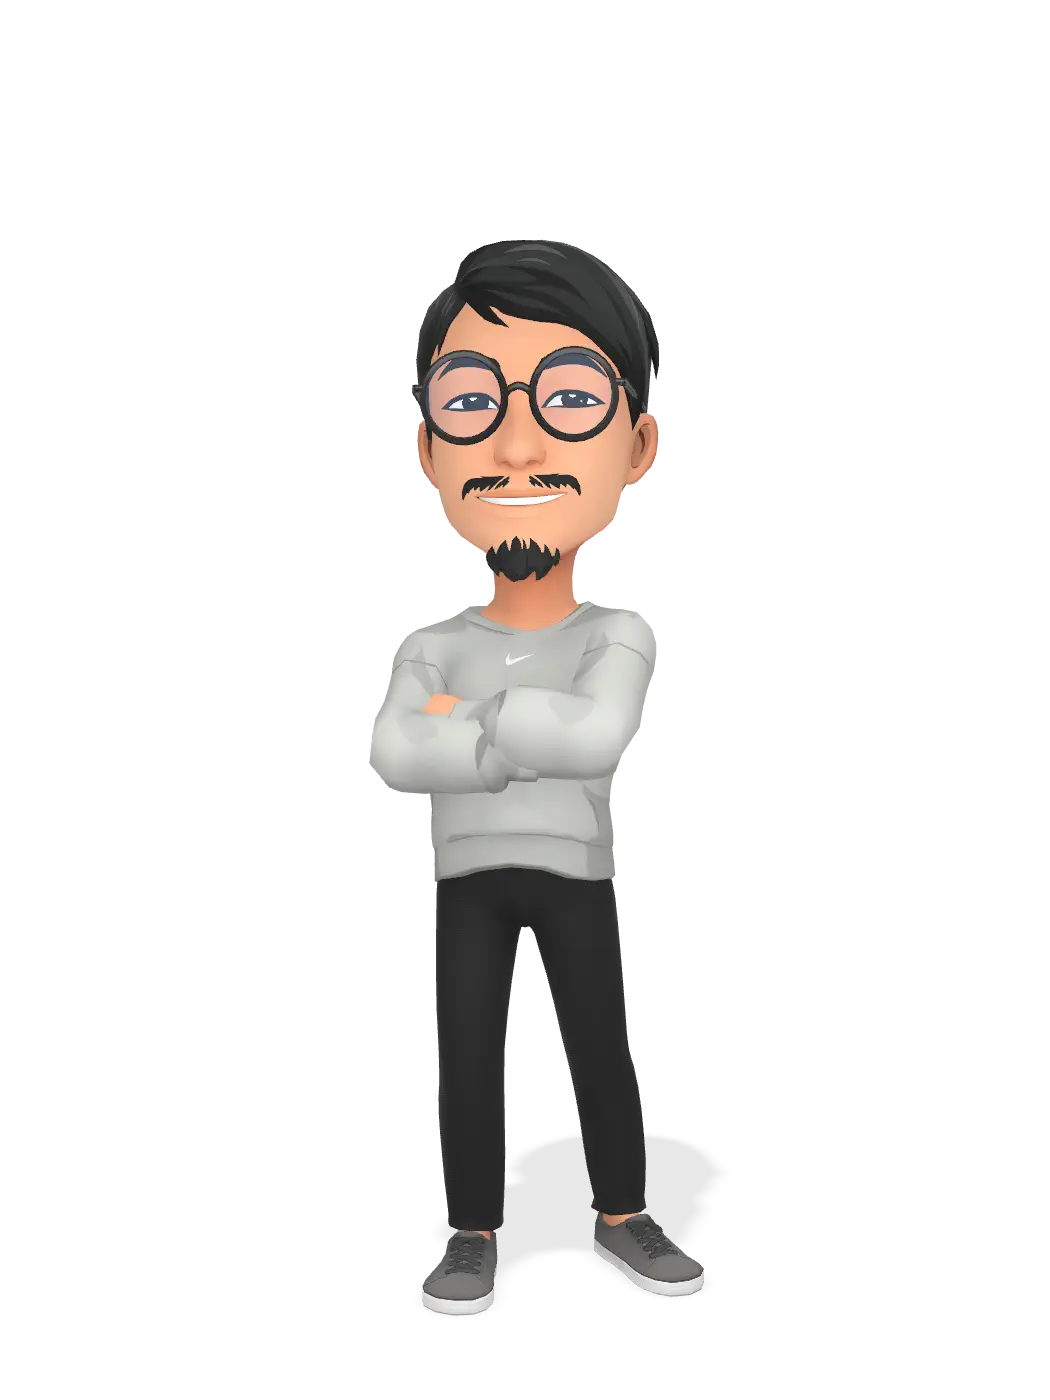 3D Bitmoji for hussamalhassoun avatar